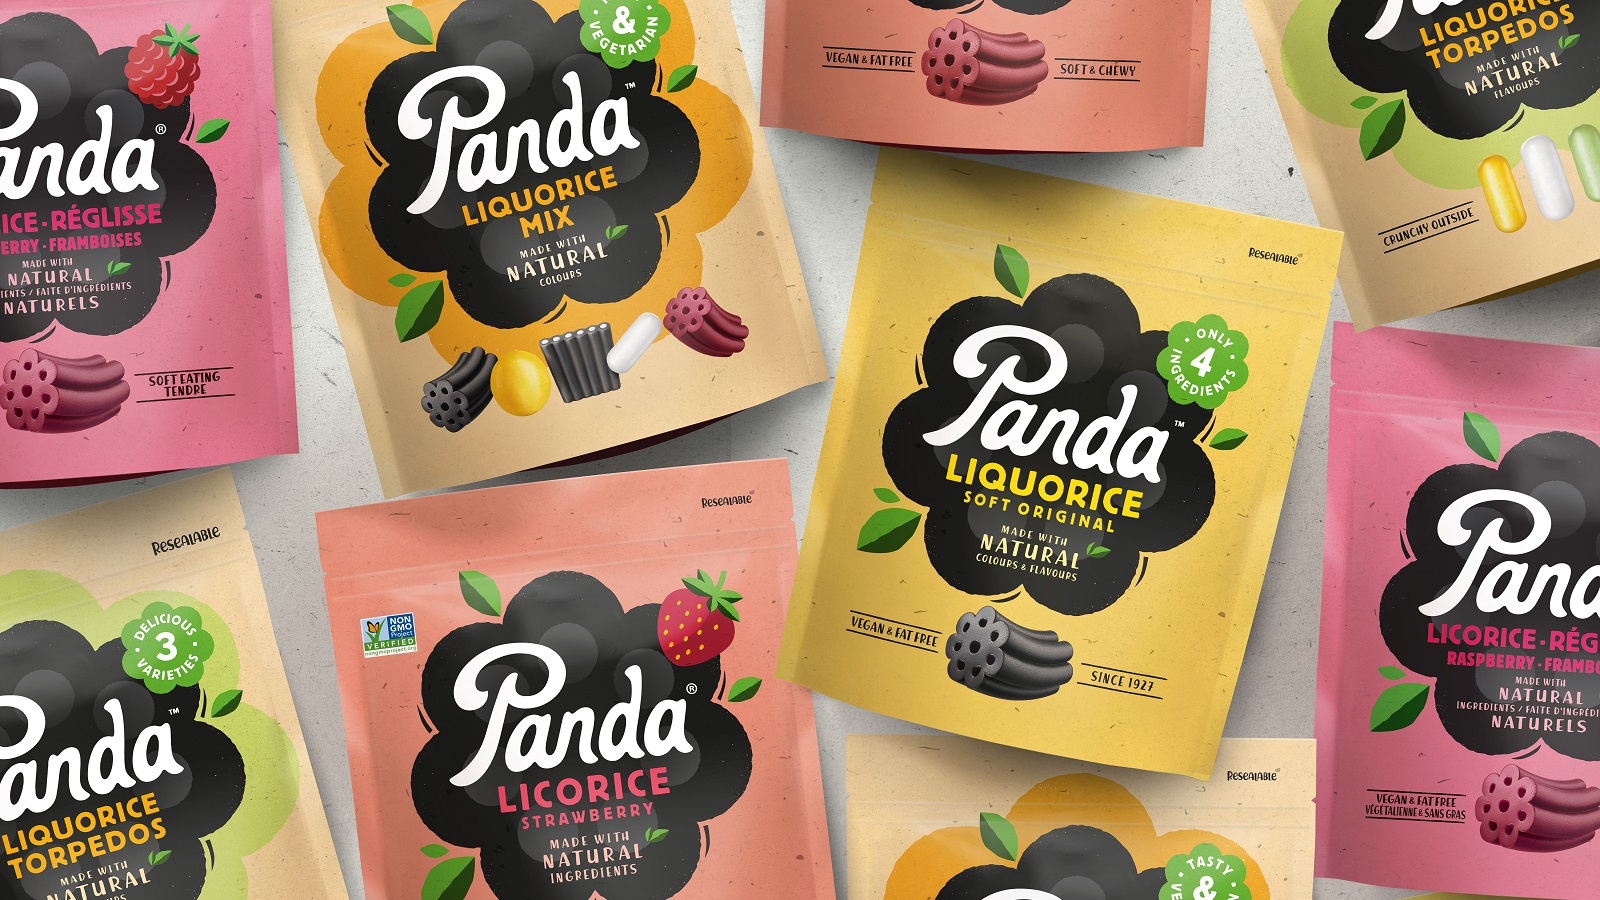 Indulge Yourself with Panda Liquorice’s “Pandastic” New Brand World